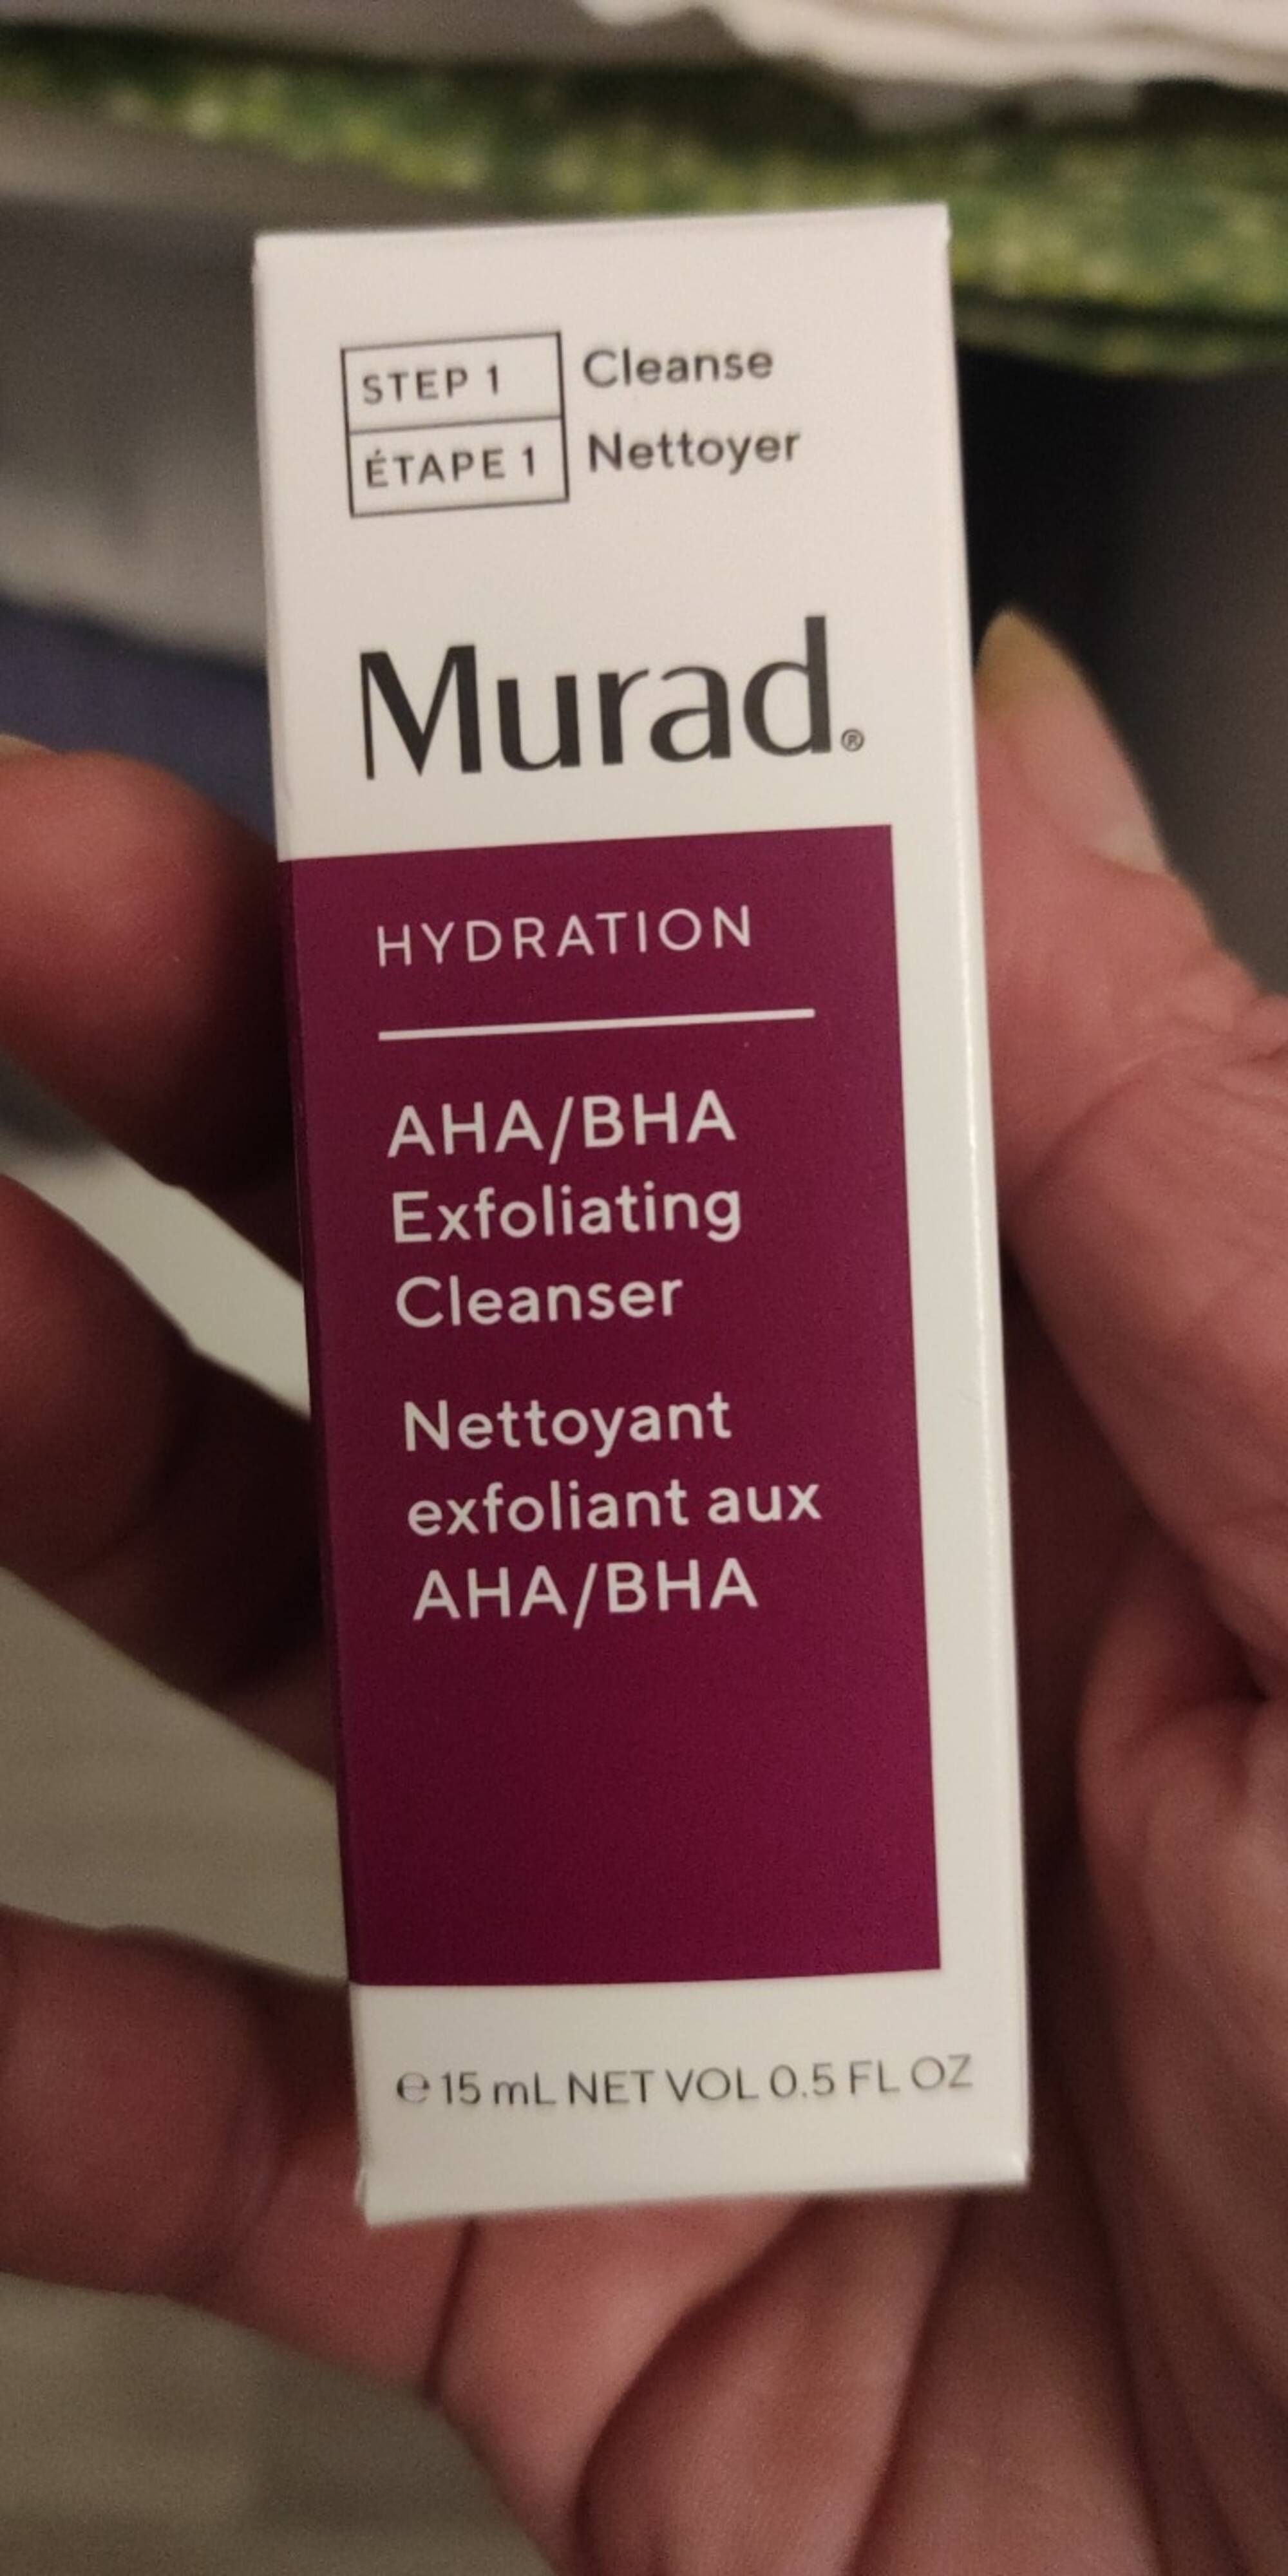 MURAD - Nettoyant exfoliant aux AHA/BHA  